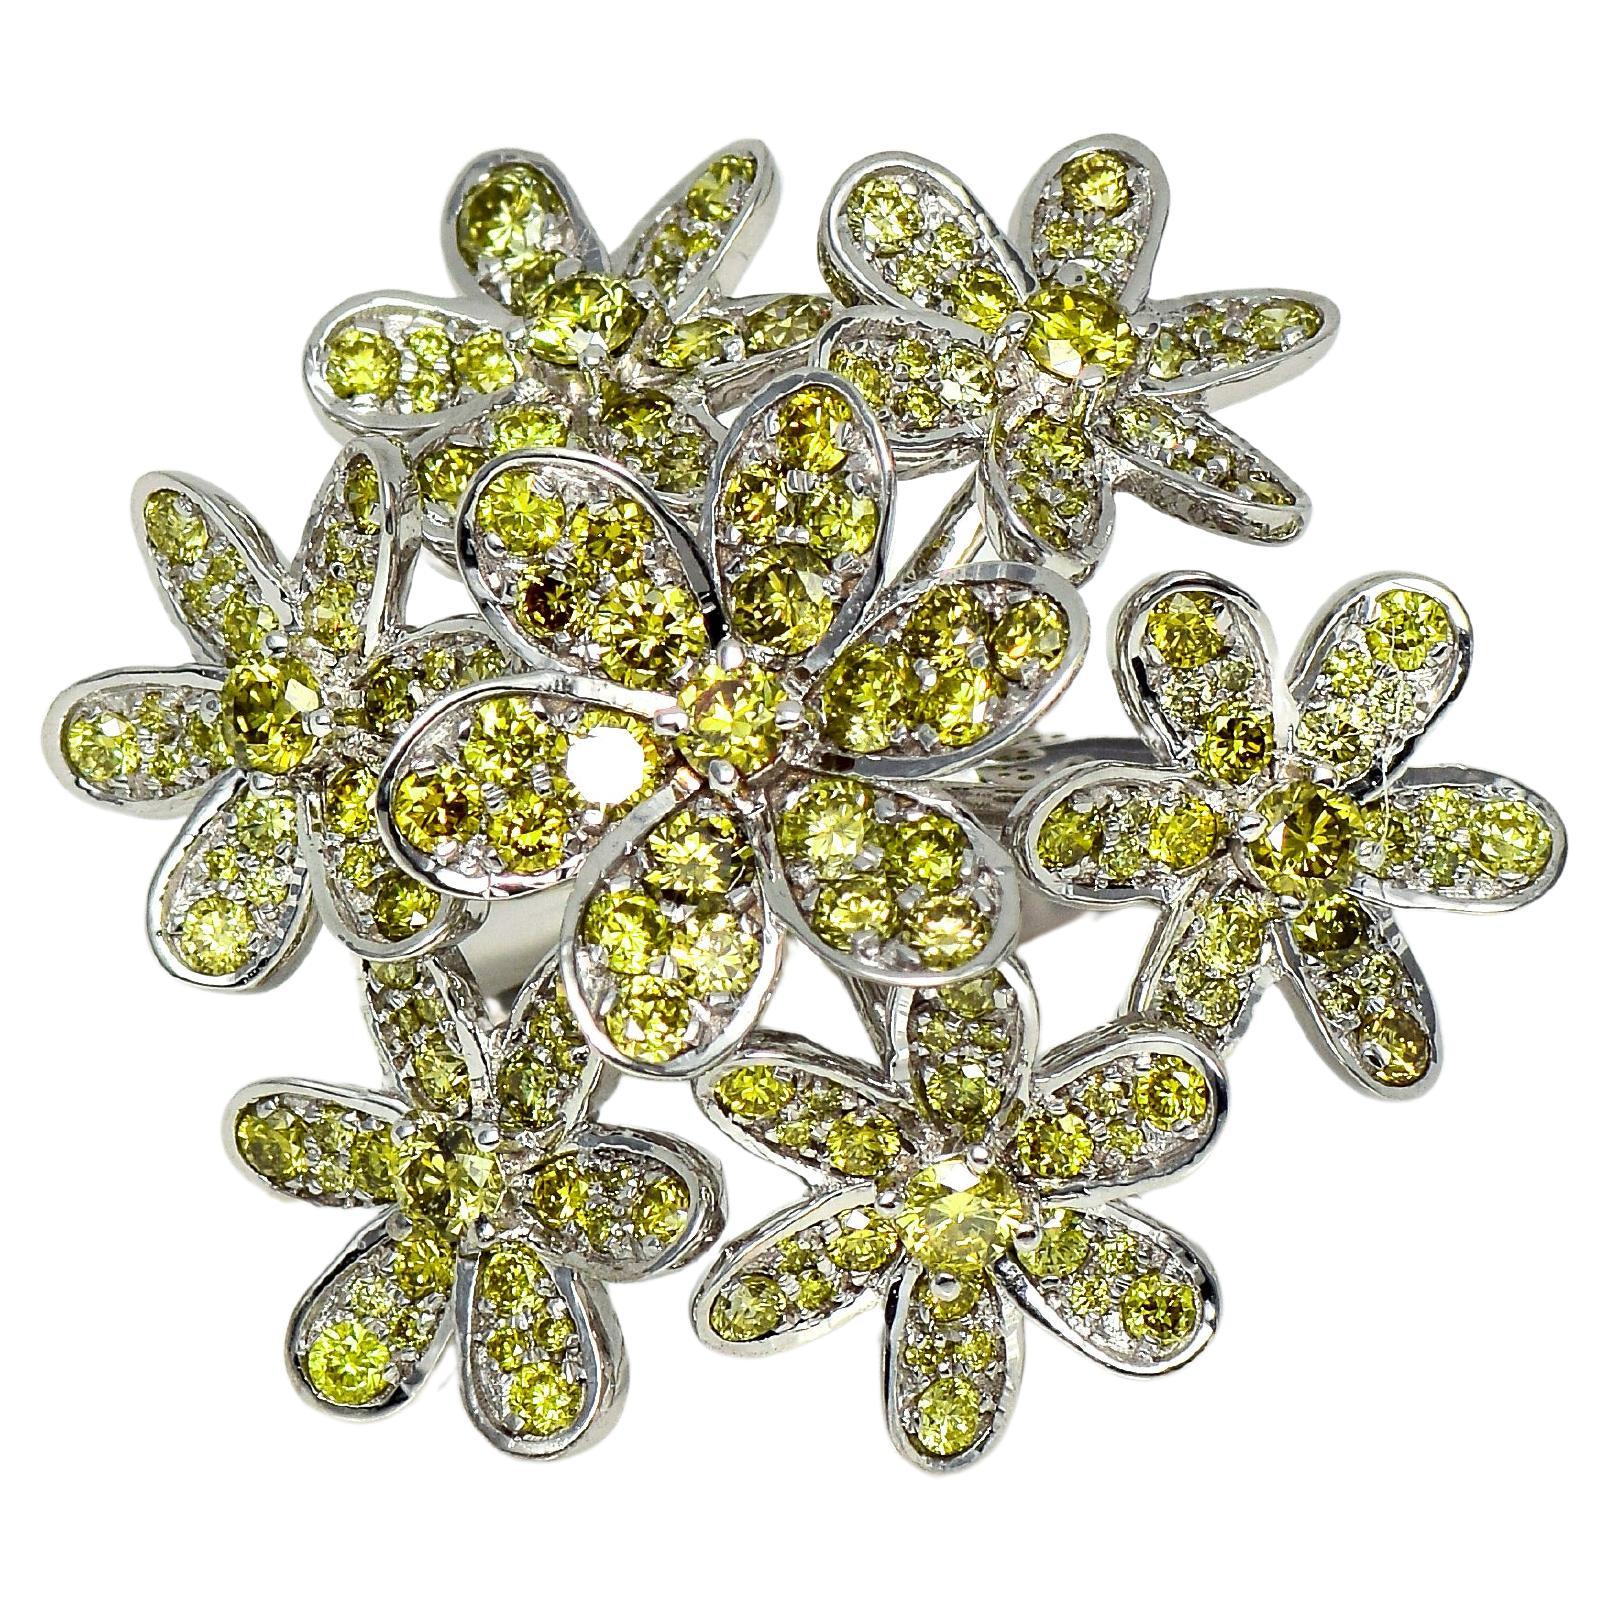 Bague cocktail IGI 18 carats, diamants jaunes verdâtres naturels de 2,06 carats, fleurs